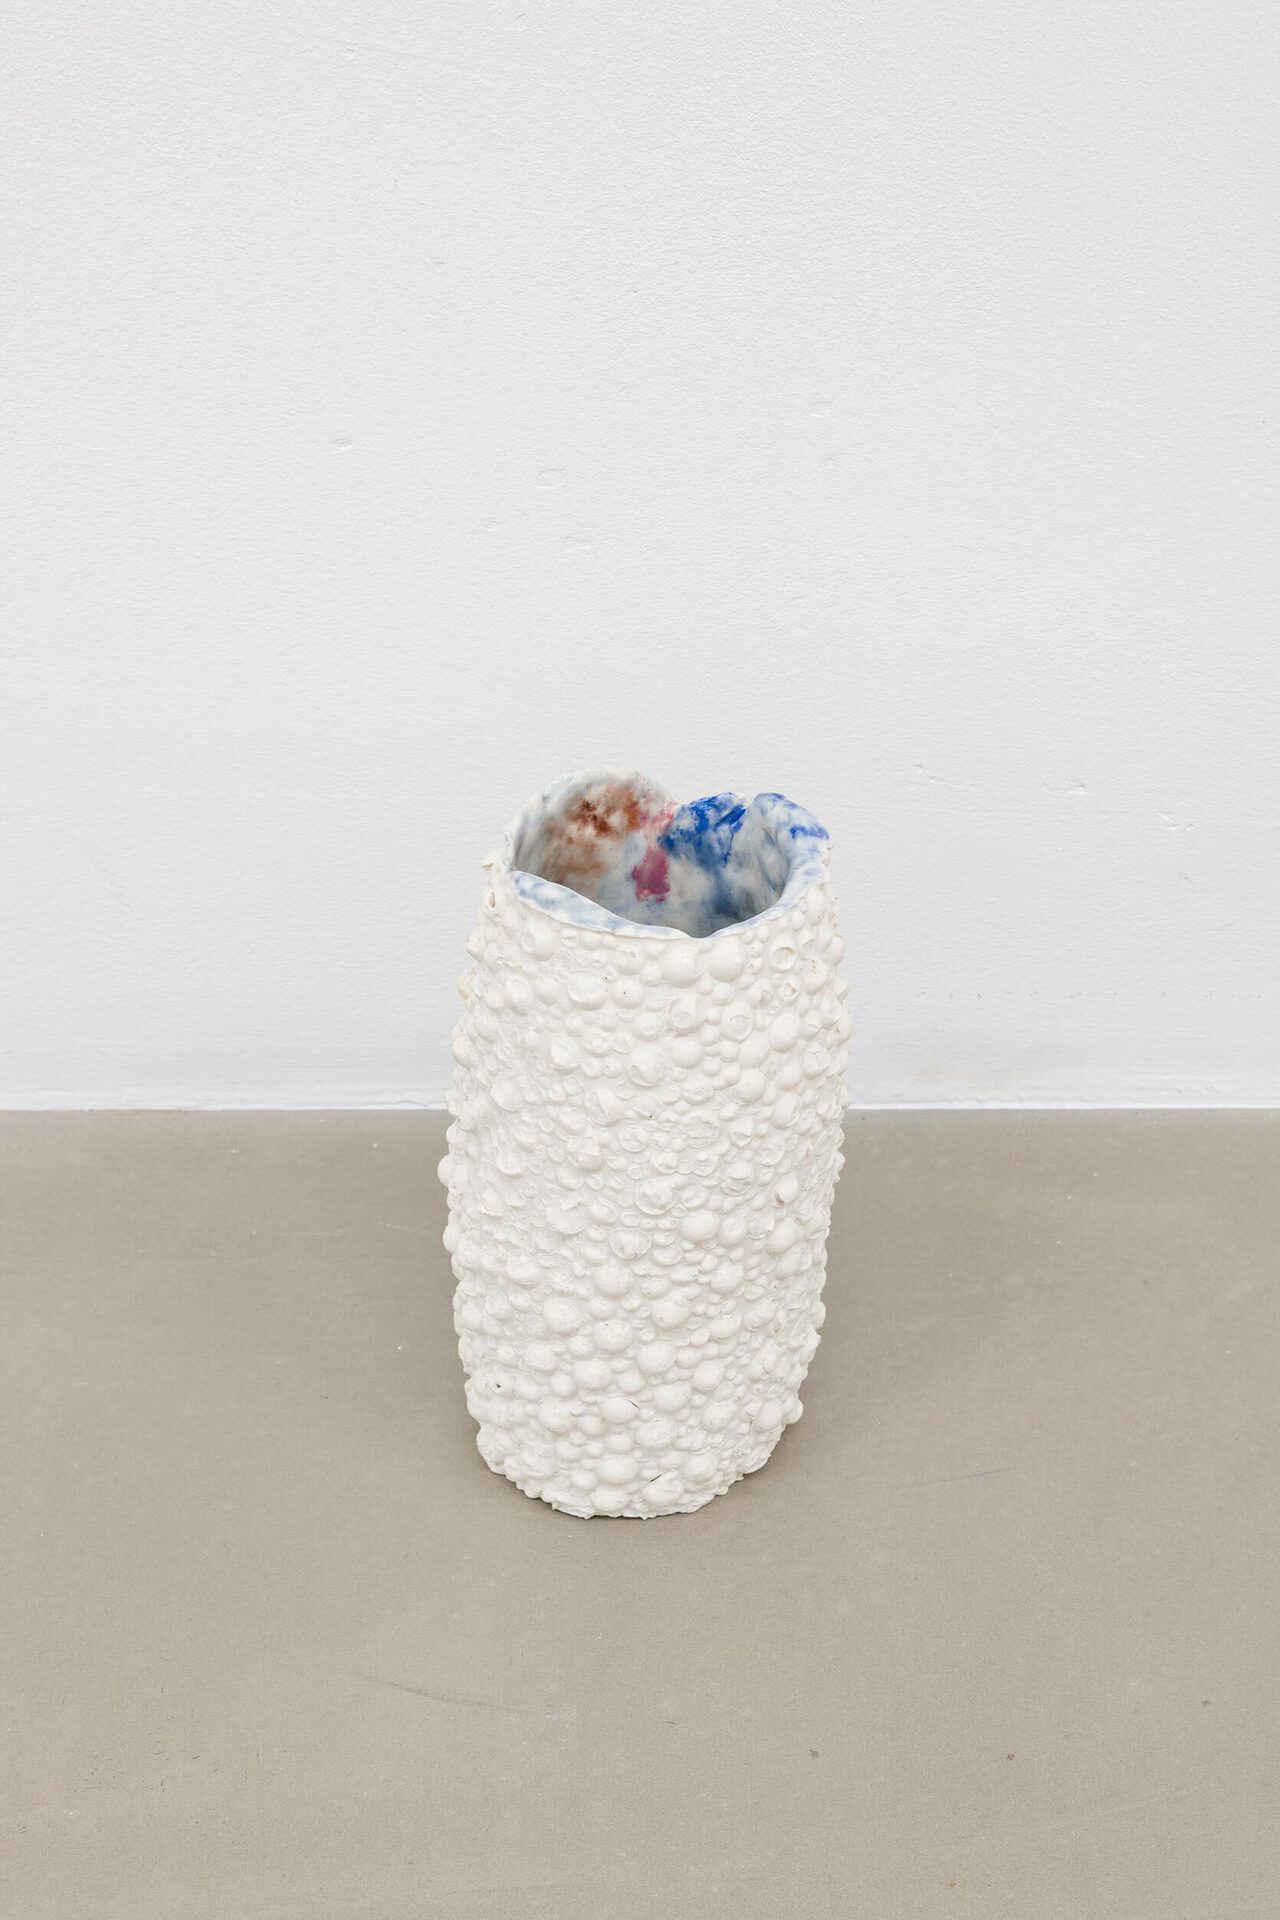 Johanna Magdalena Guggenberger, schmeeone, vase, 2022, glazed porcelain, 17 × 9 × 9 cm. Courtesy Wonnerth Dejaco, Belmacz and the artist. Photo: Peter Mochi